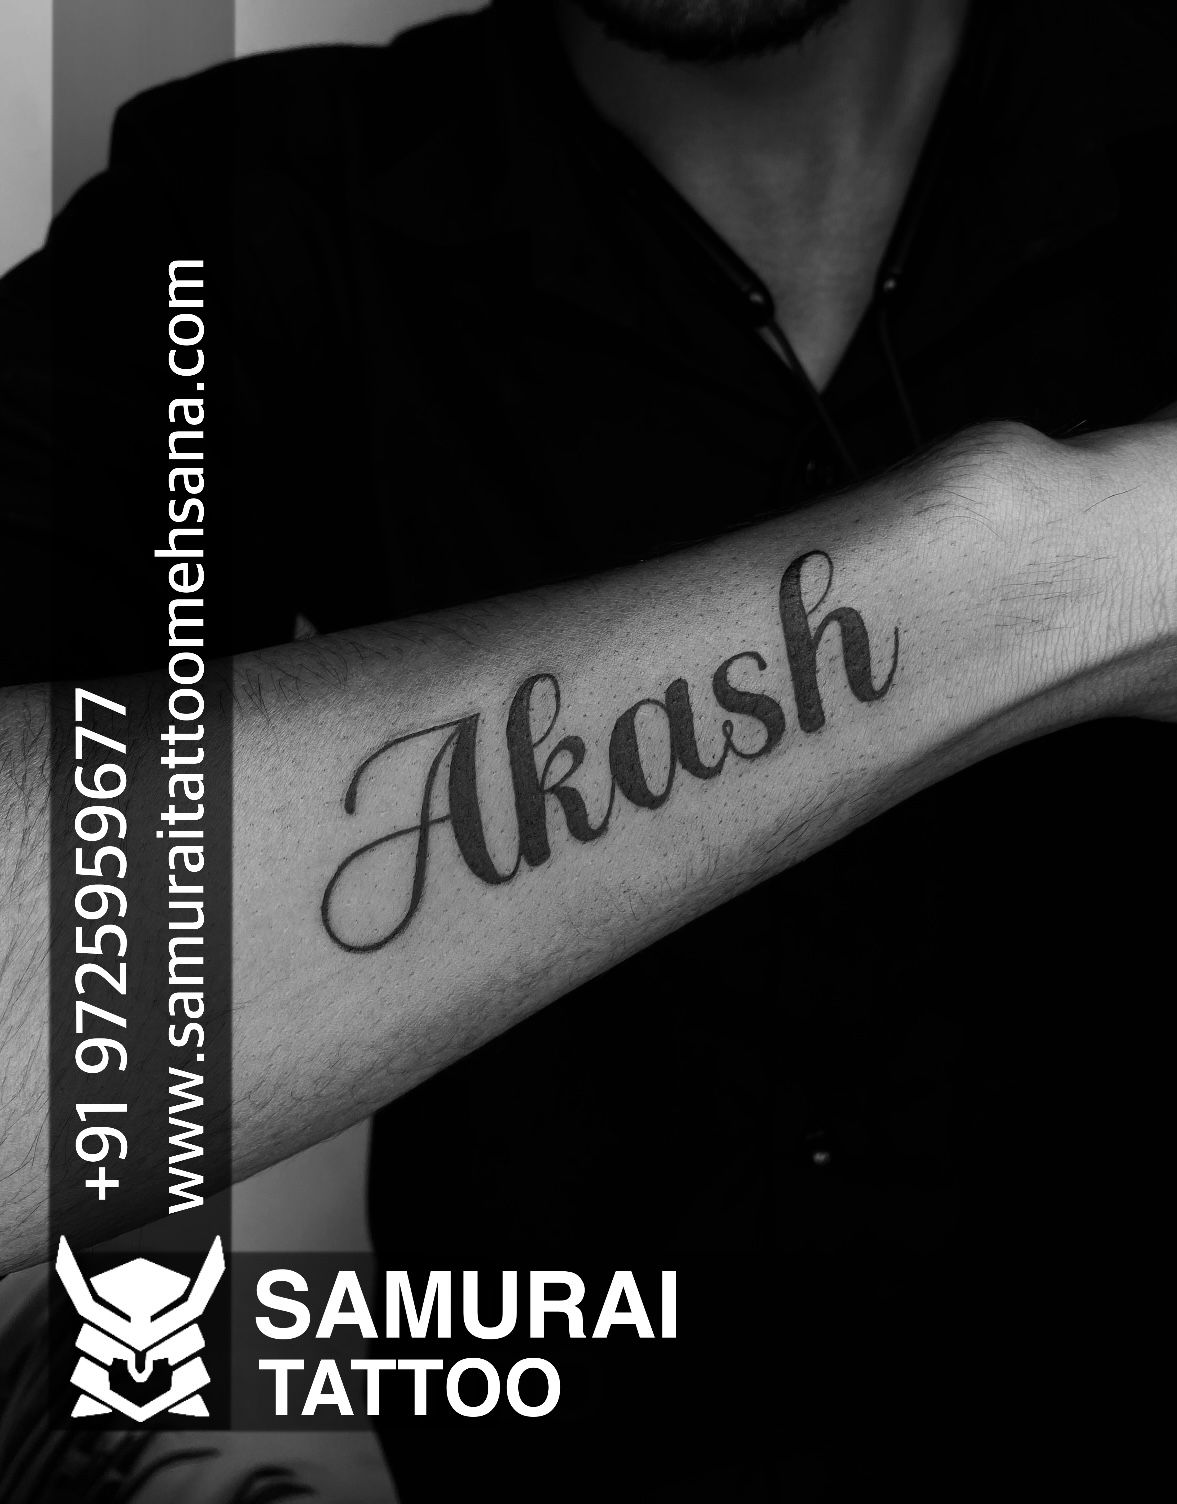 Akash name tattoo work on hand  Anizmaink 917309749279  918574302039  Instagram